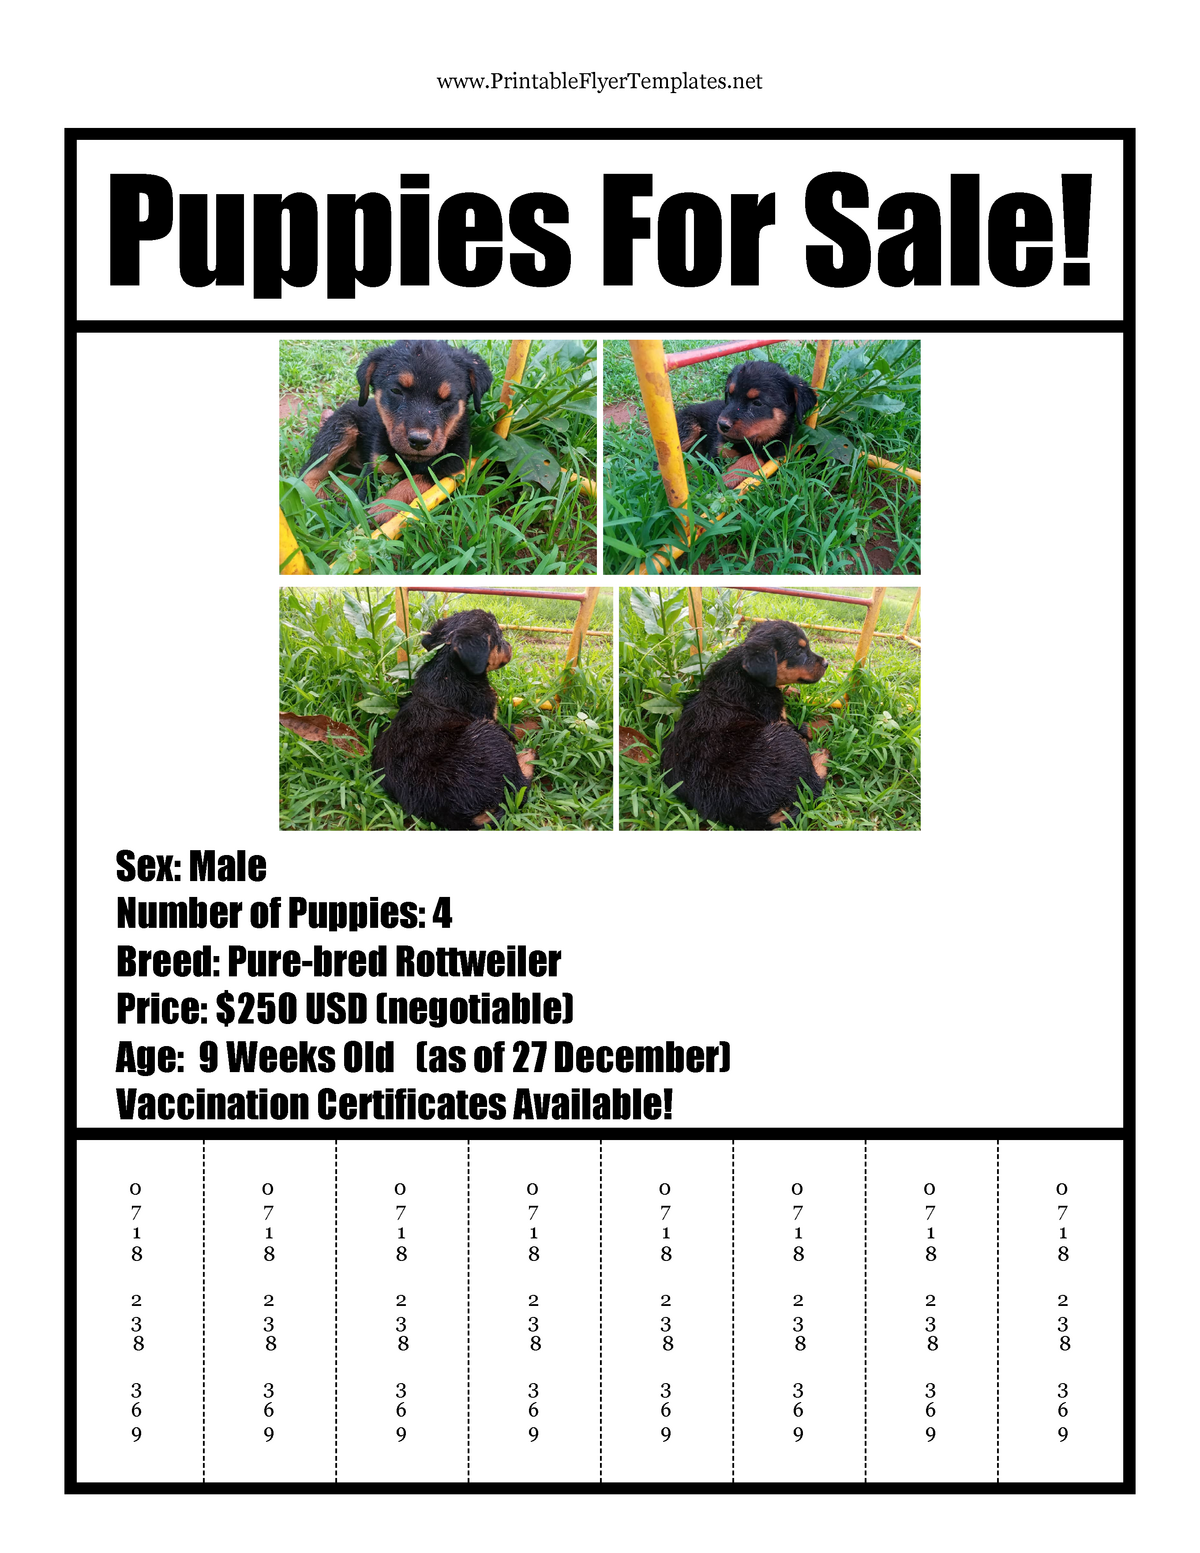 puppies-for-sale-flyer-x-google-docs-web-applications-development